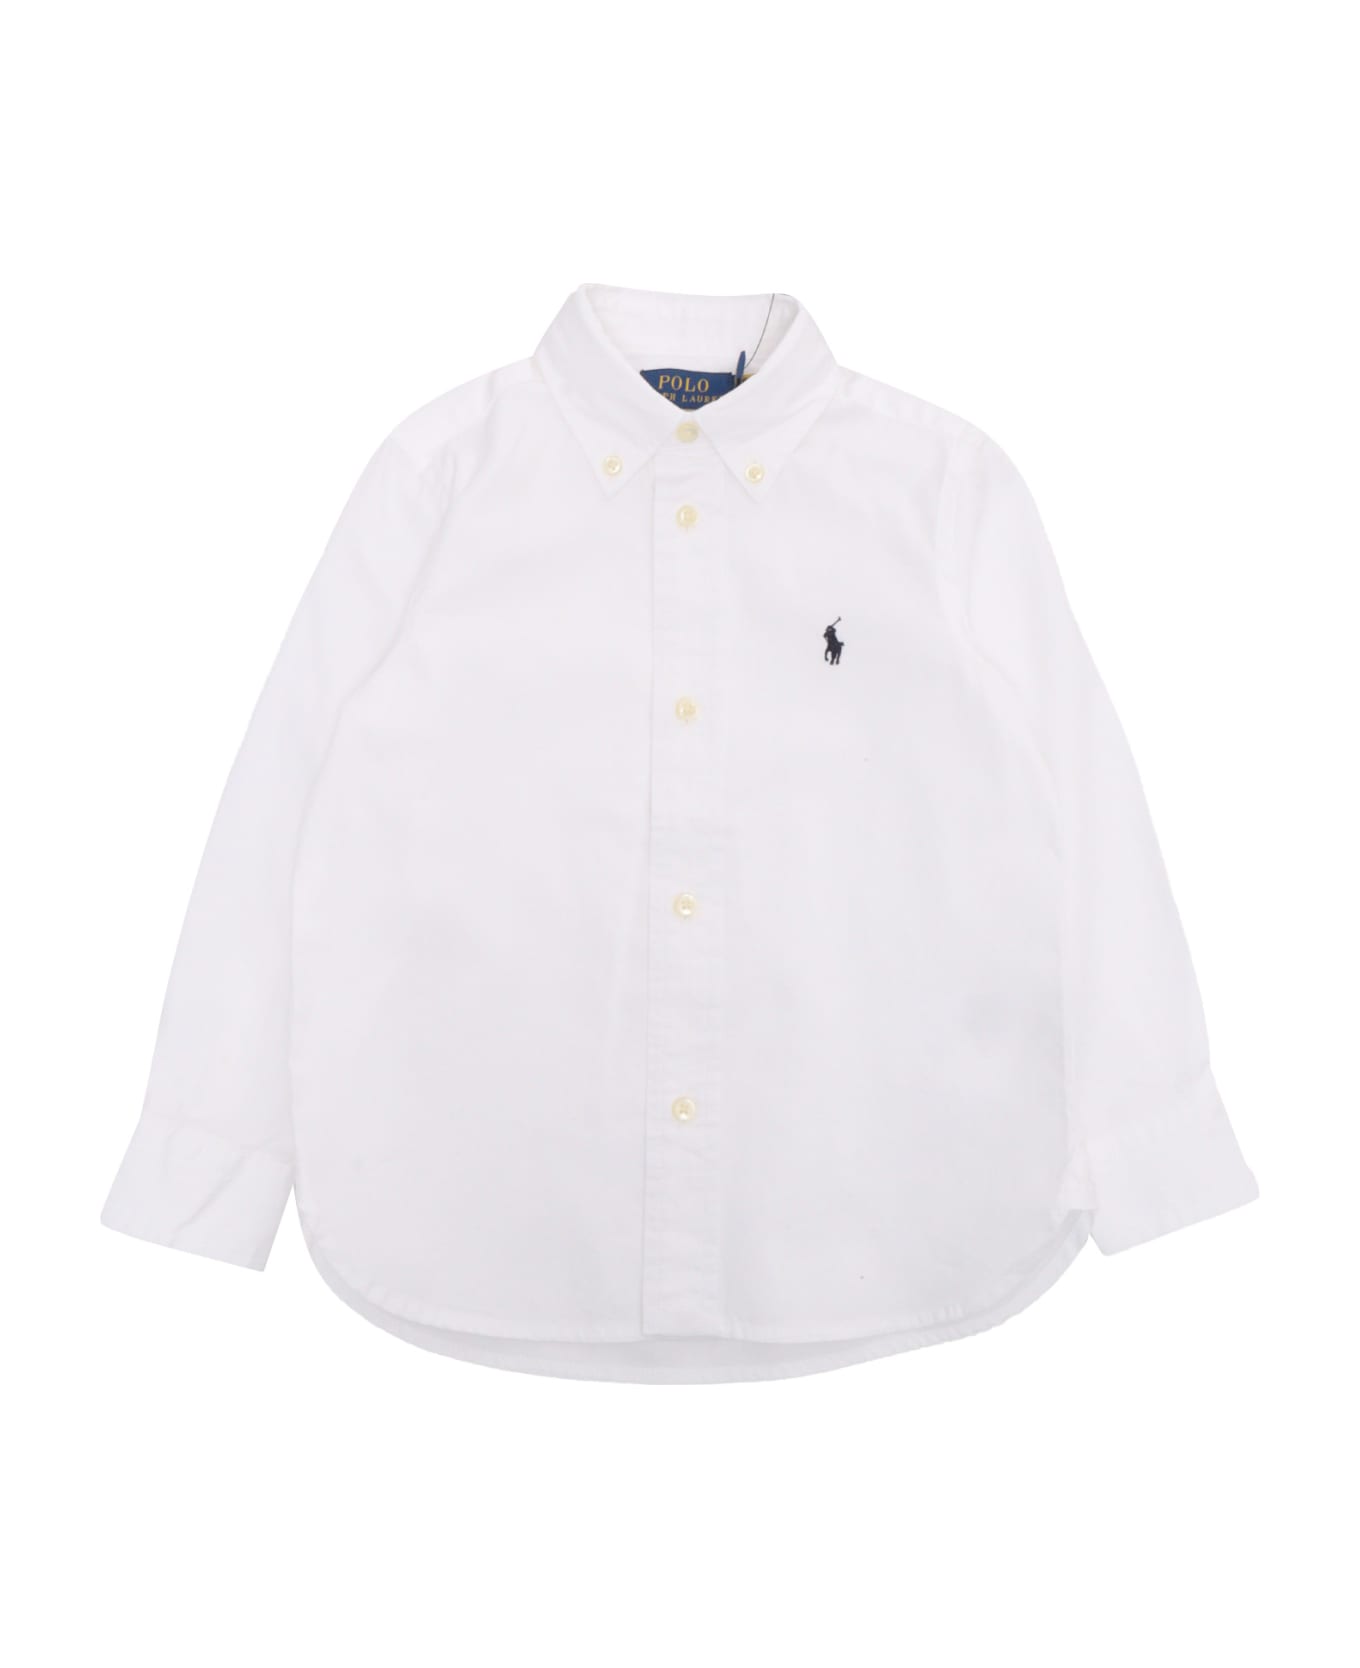 Polo Ralph Lauren White Shirt With Logo - WHITE シャツ